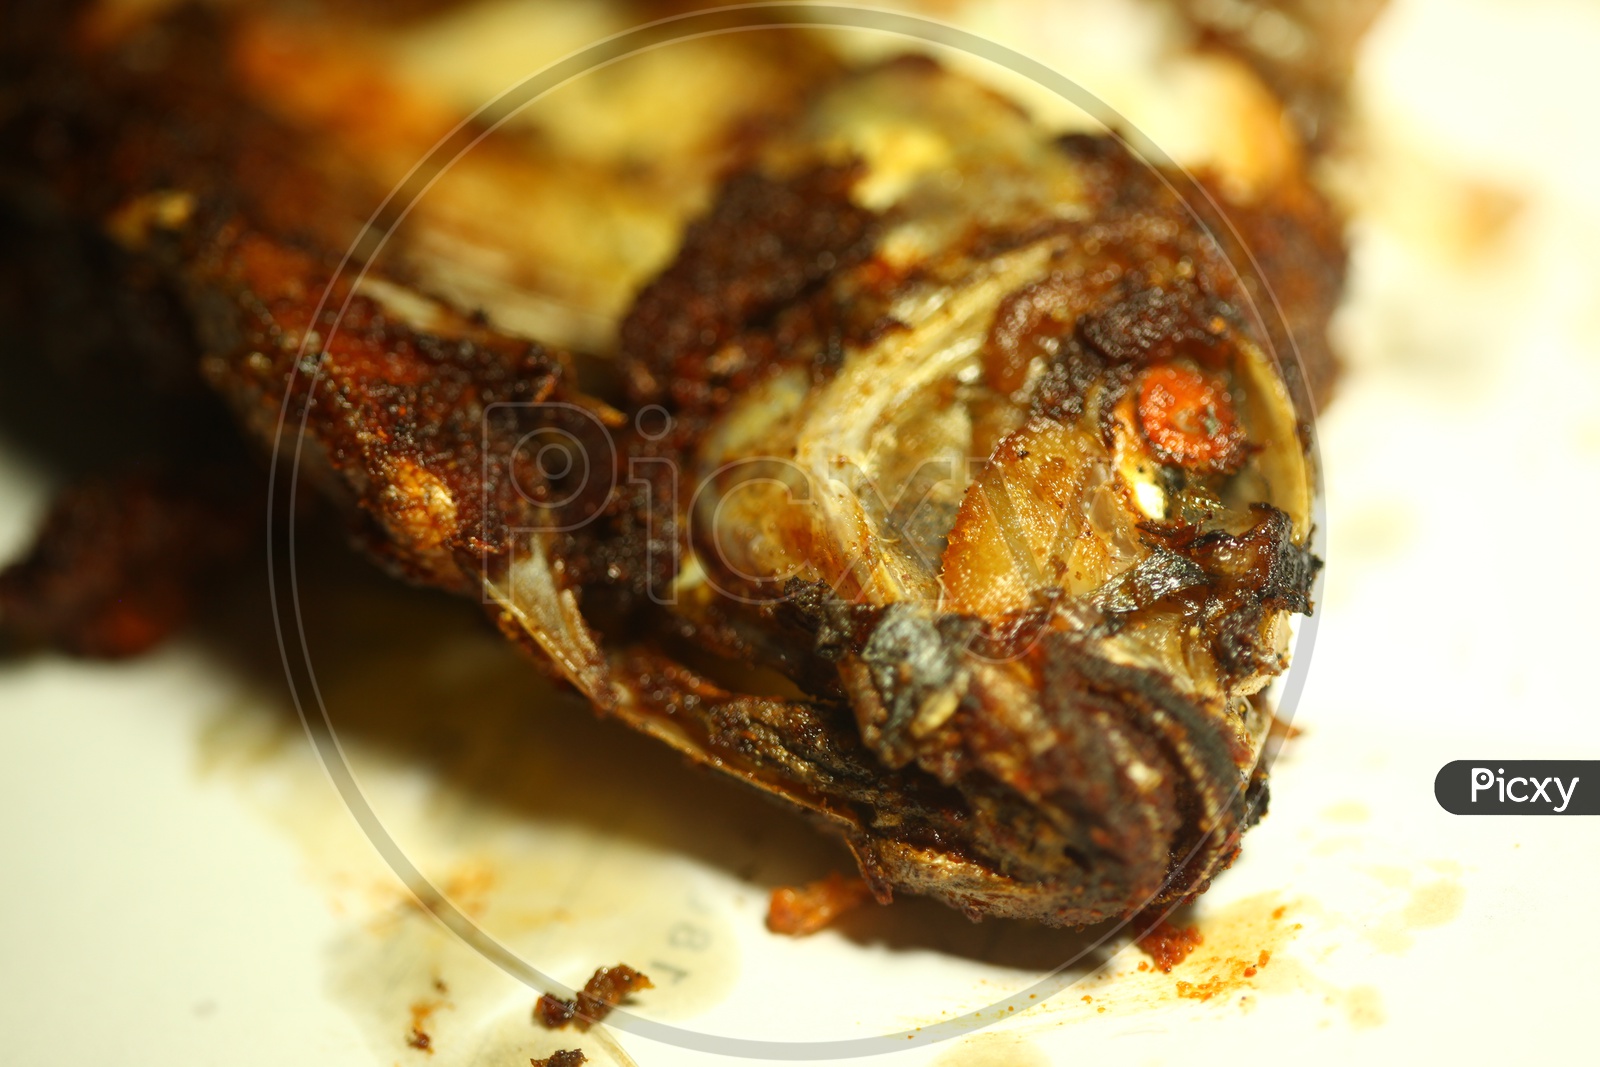 Close up shot of a fried fish